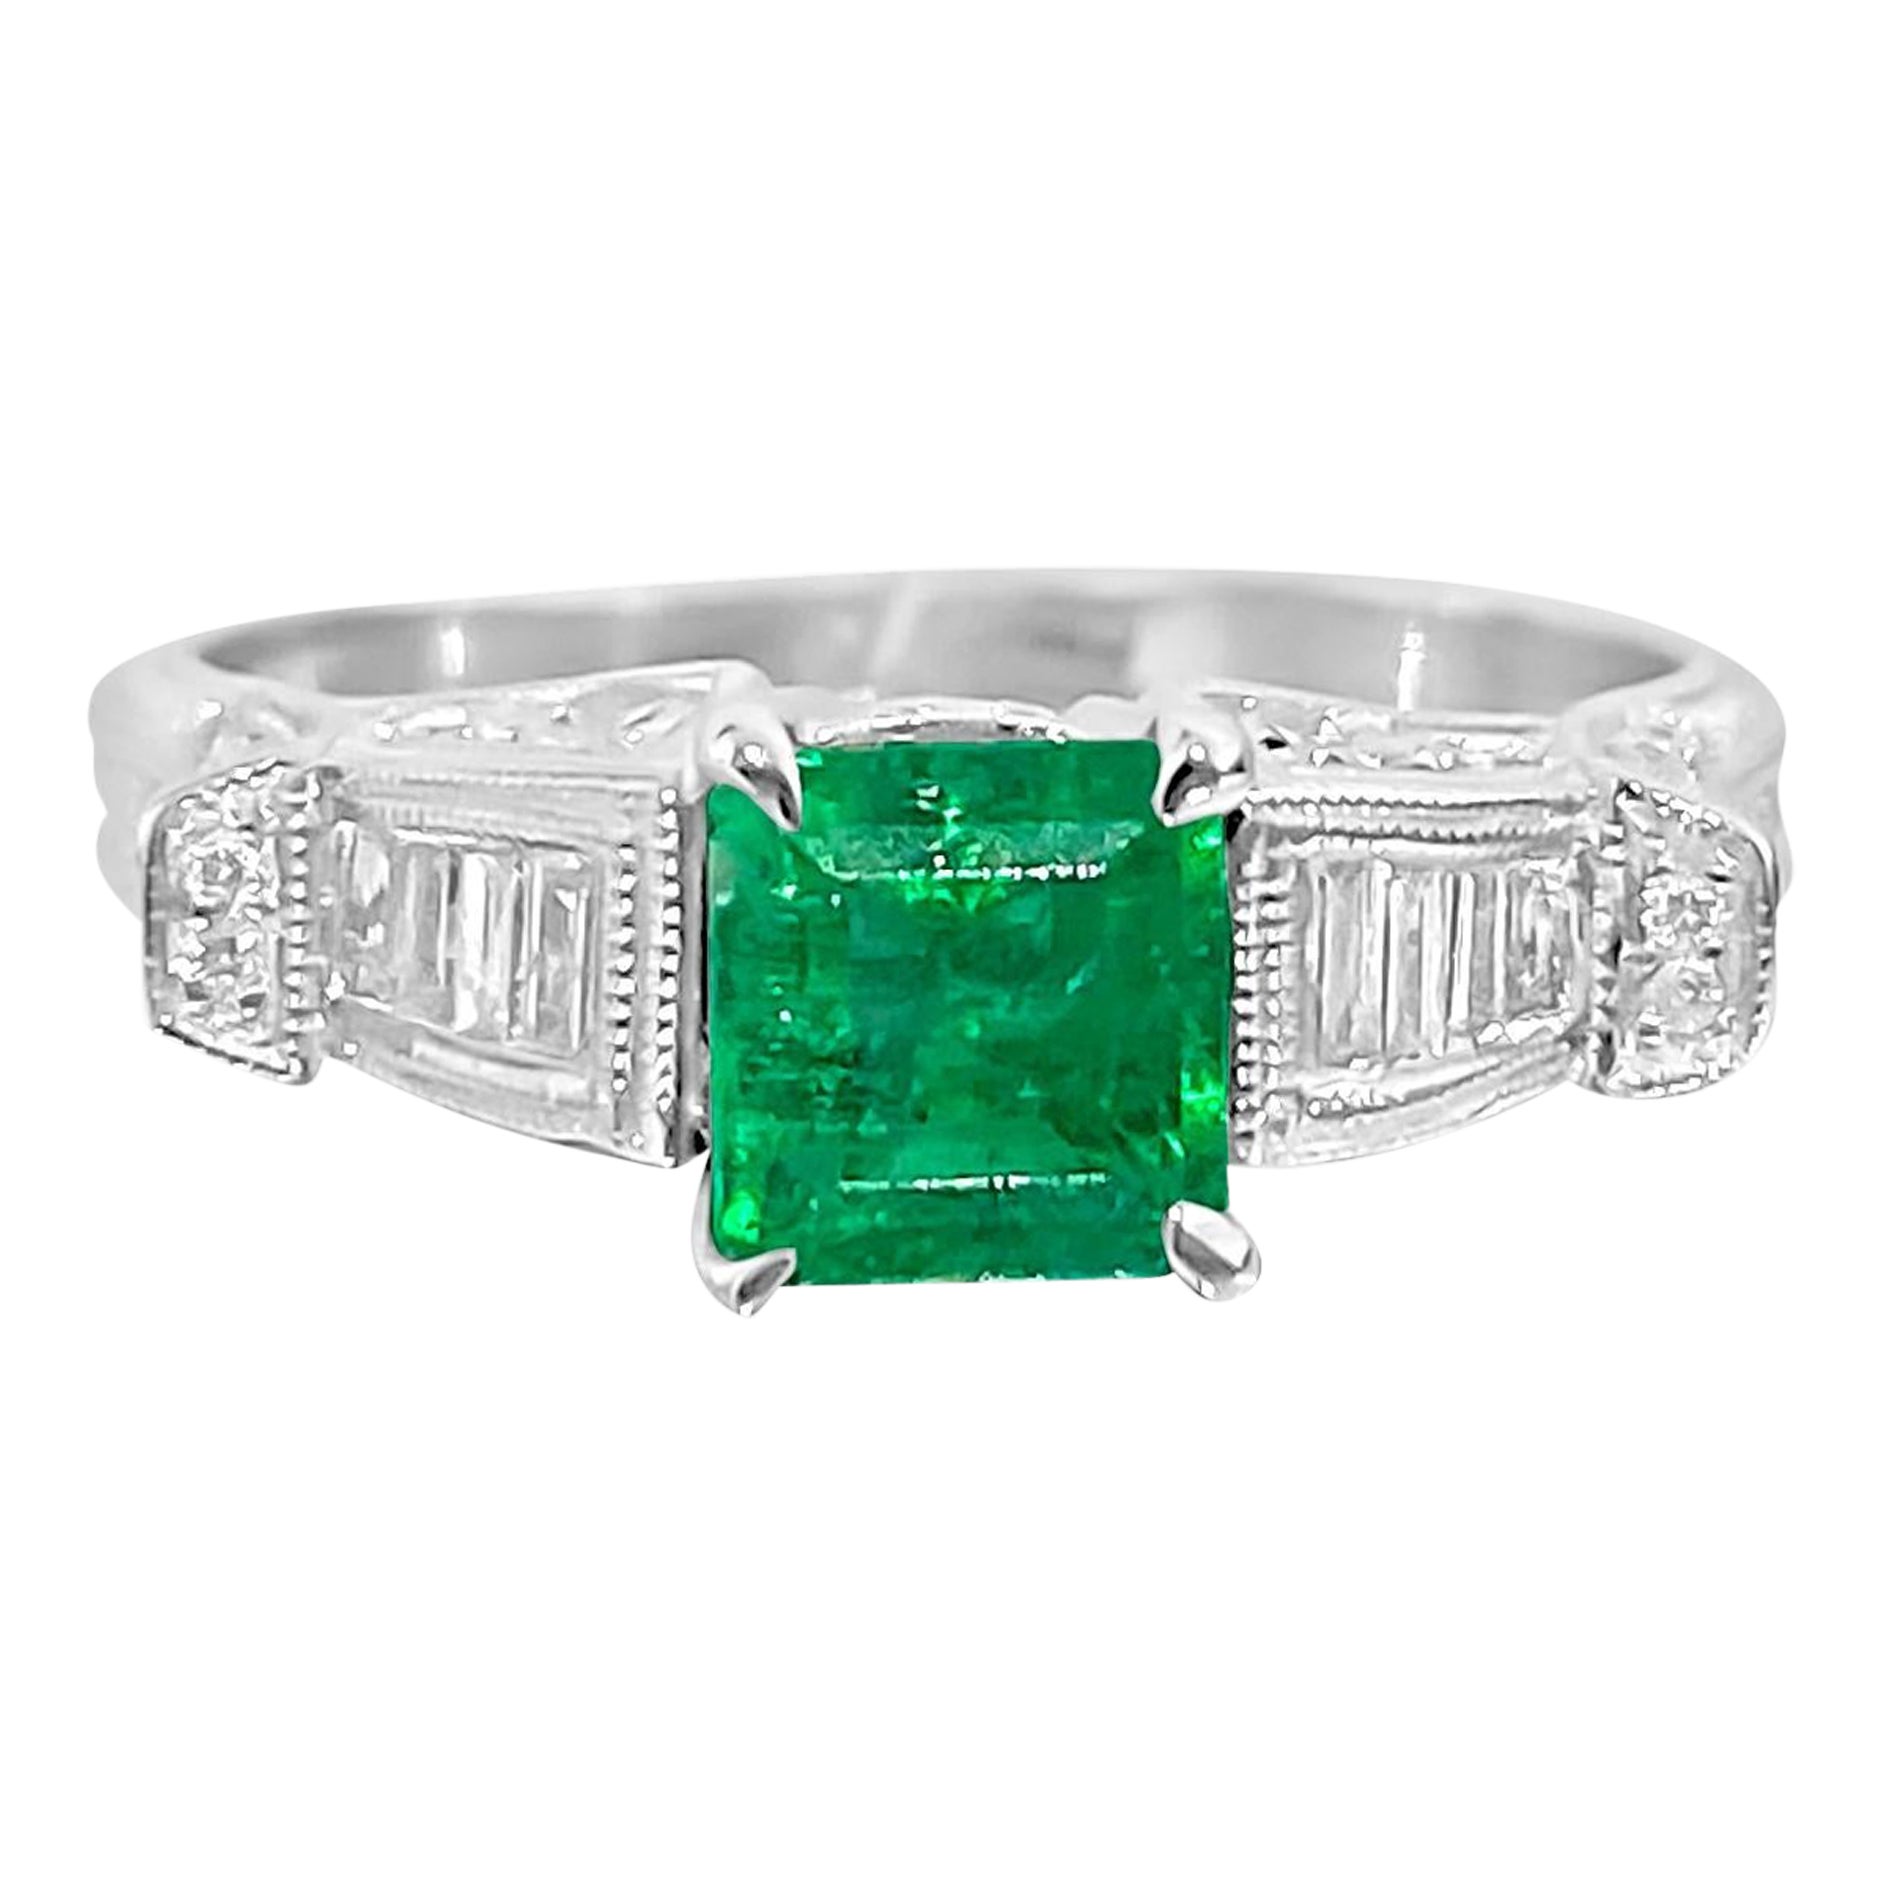 1.80 Carat Colombian Emerald Diamond Cocktail Ring